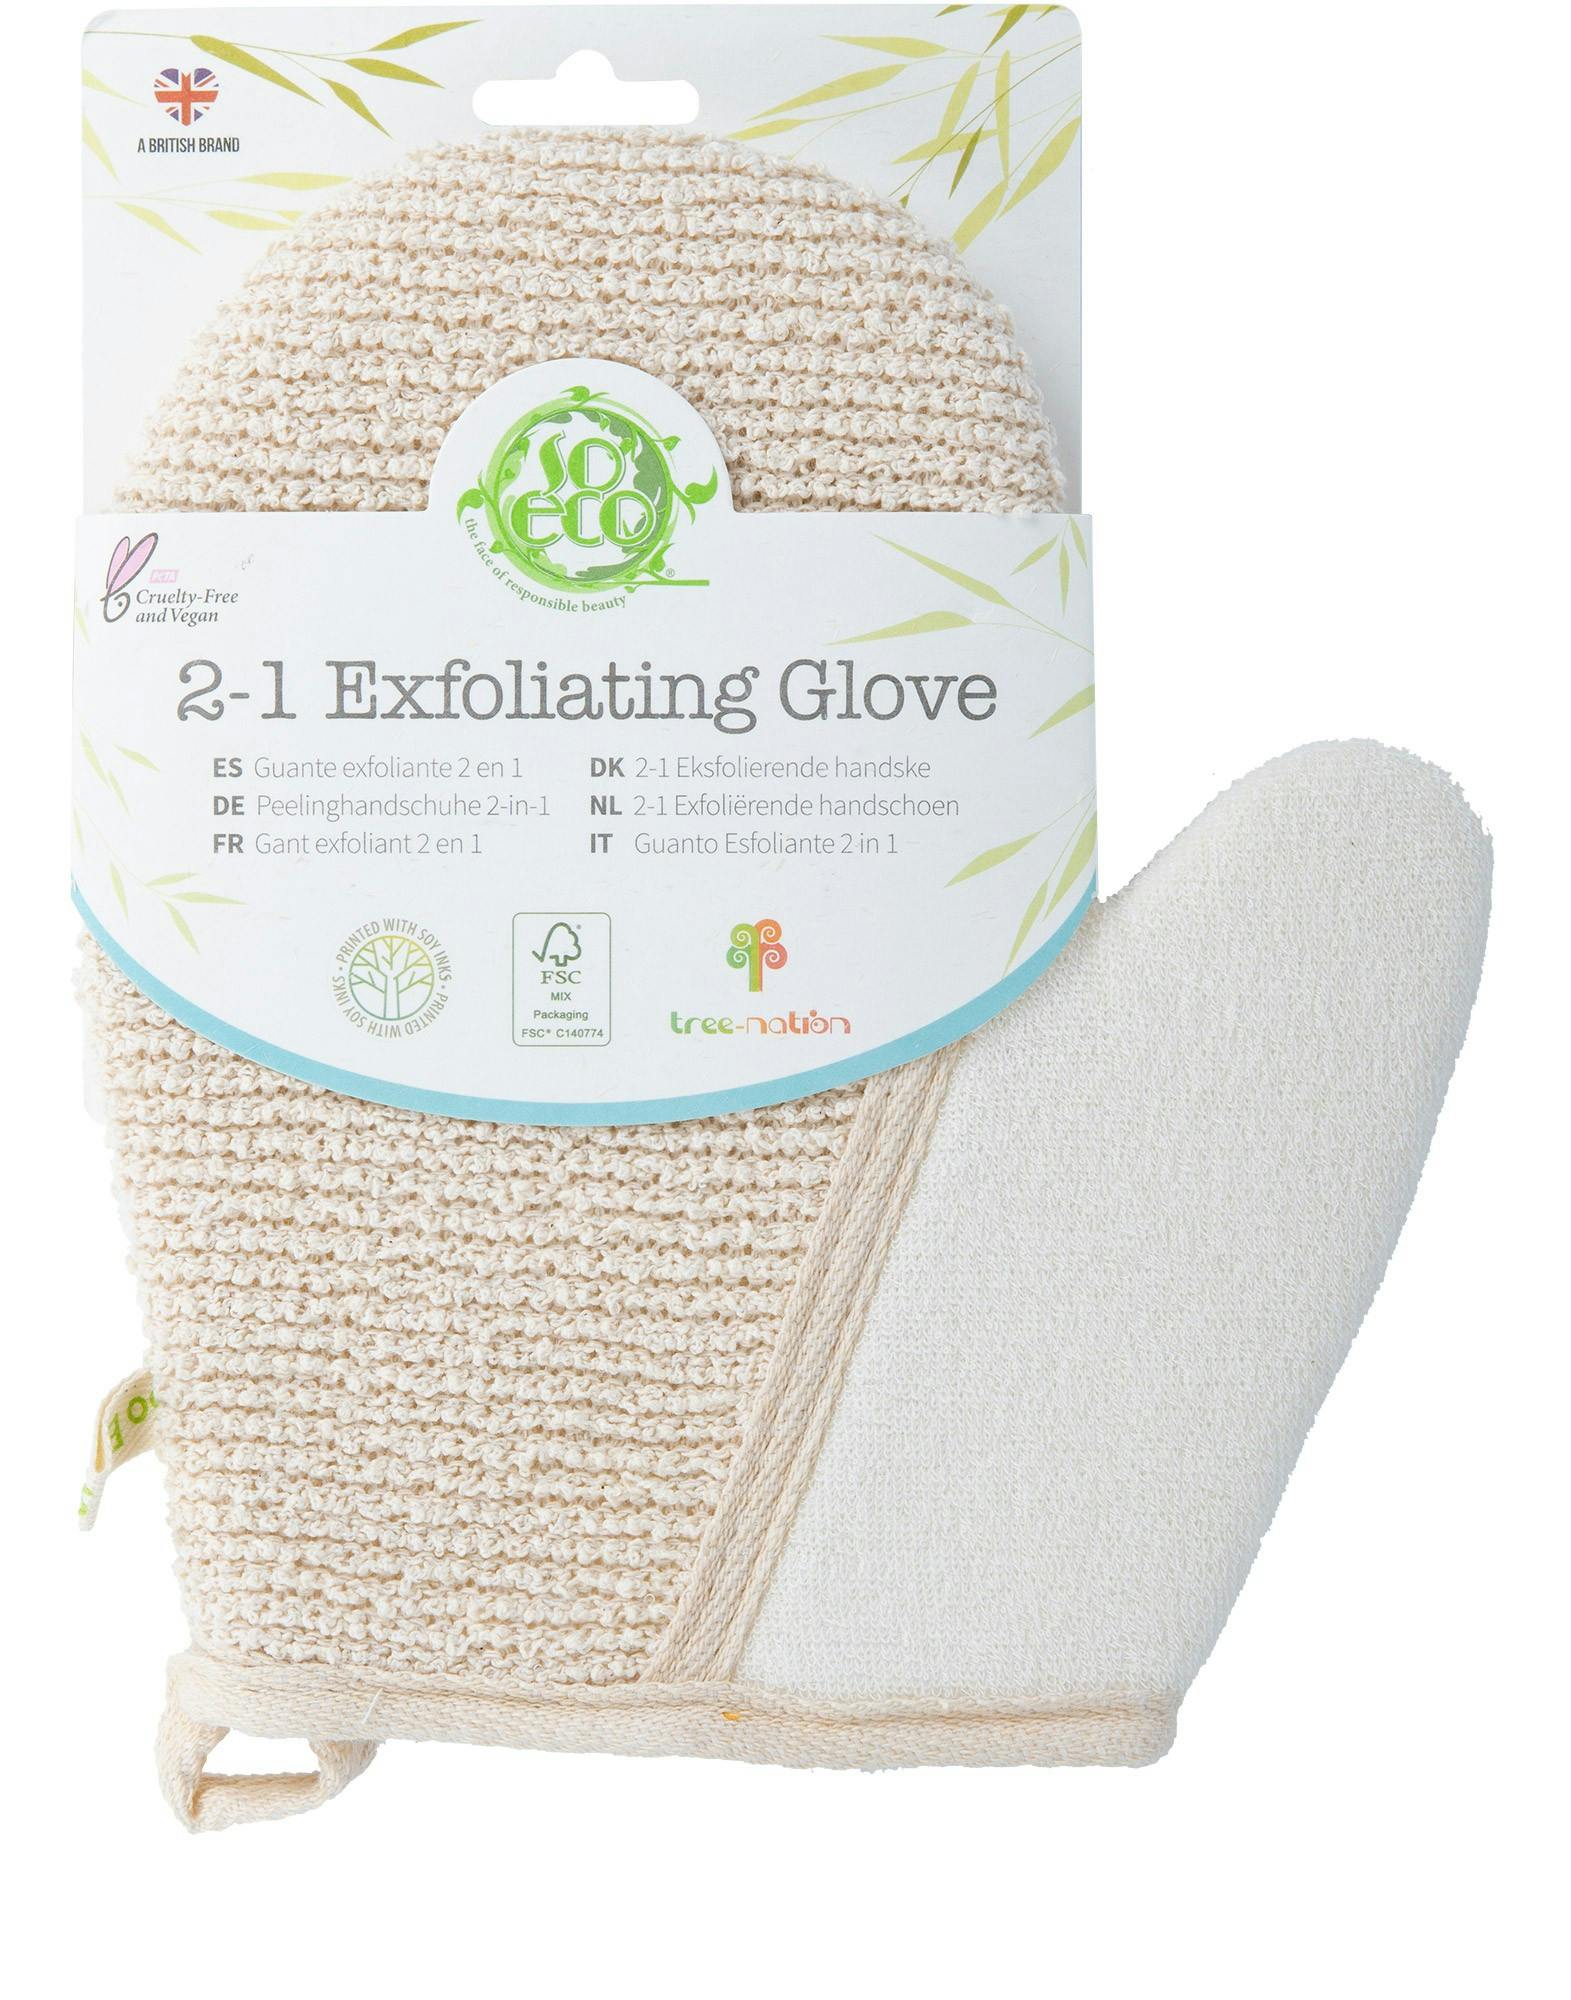 soeco So Eco 2-1 Exfoliating Glove